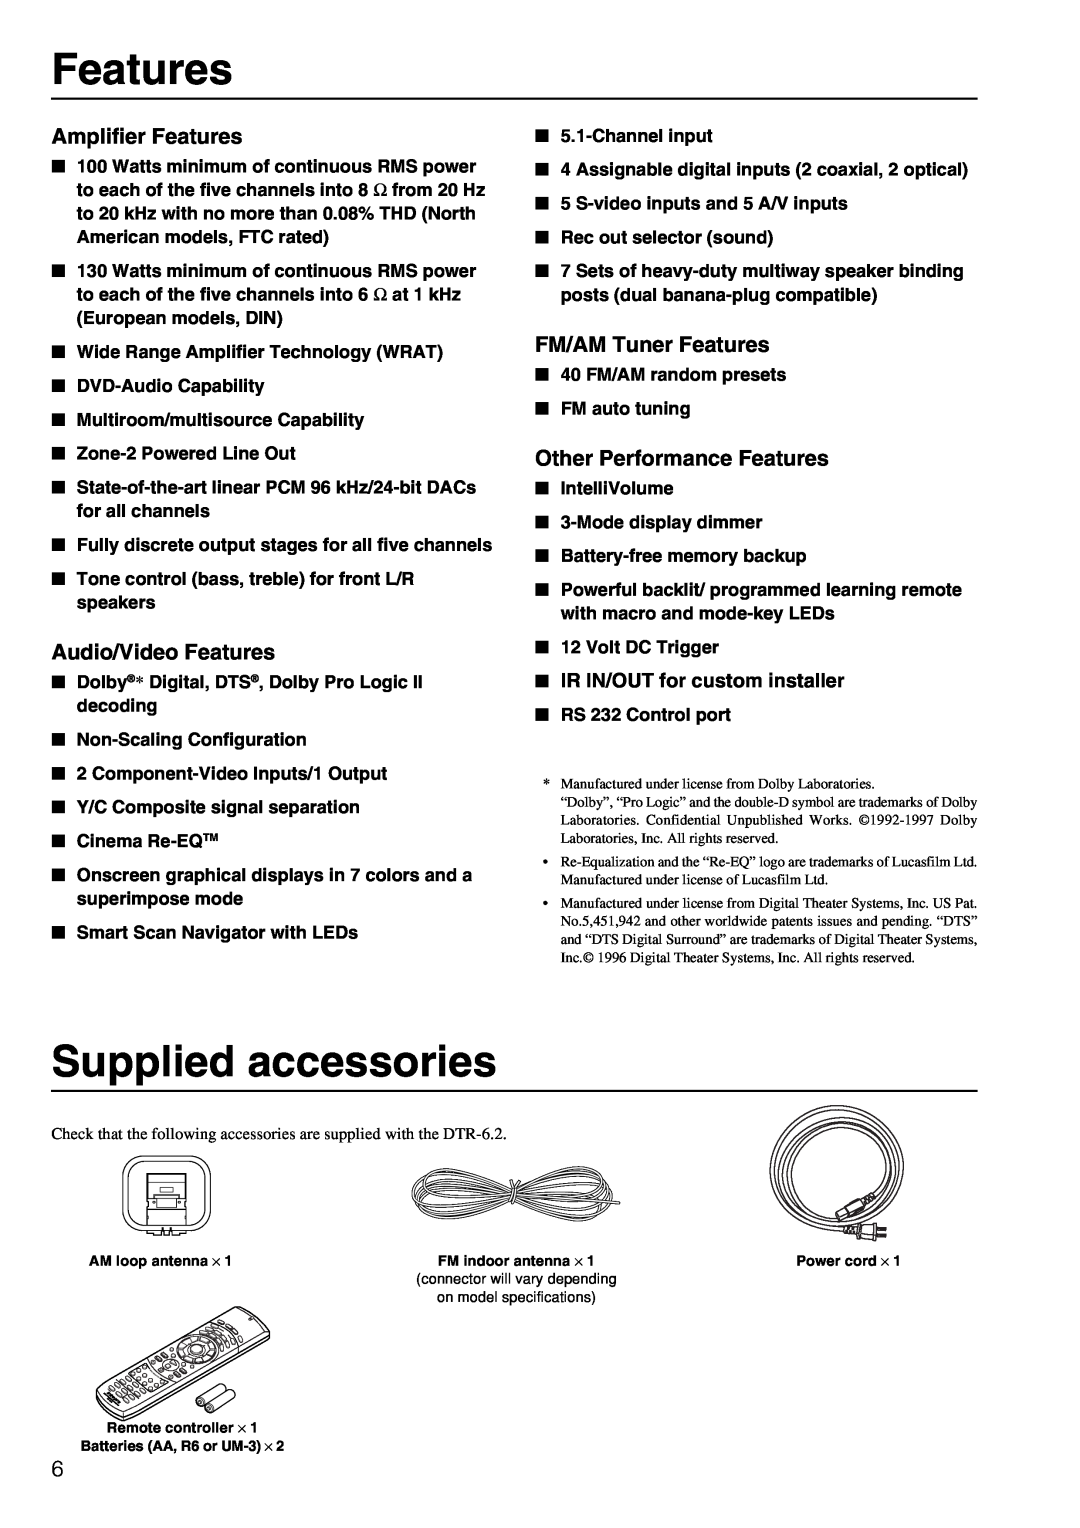 Integra DTR-6.2 Supplied accessories, Amplifier Features, Audio/Video Features, FM/AM Tuner Features, Channelinput 